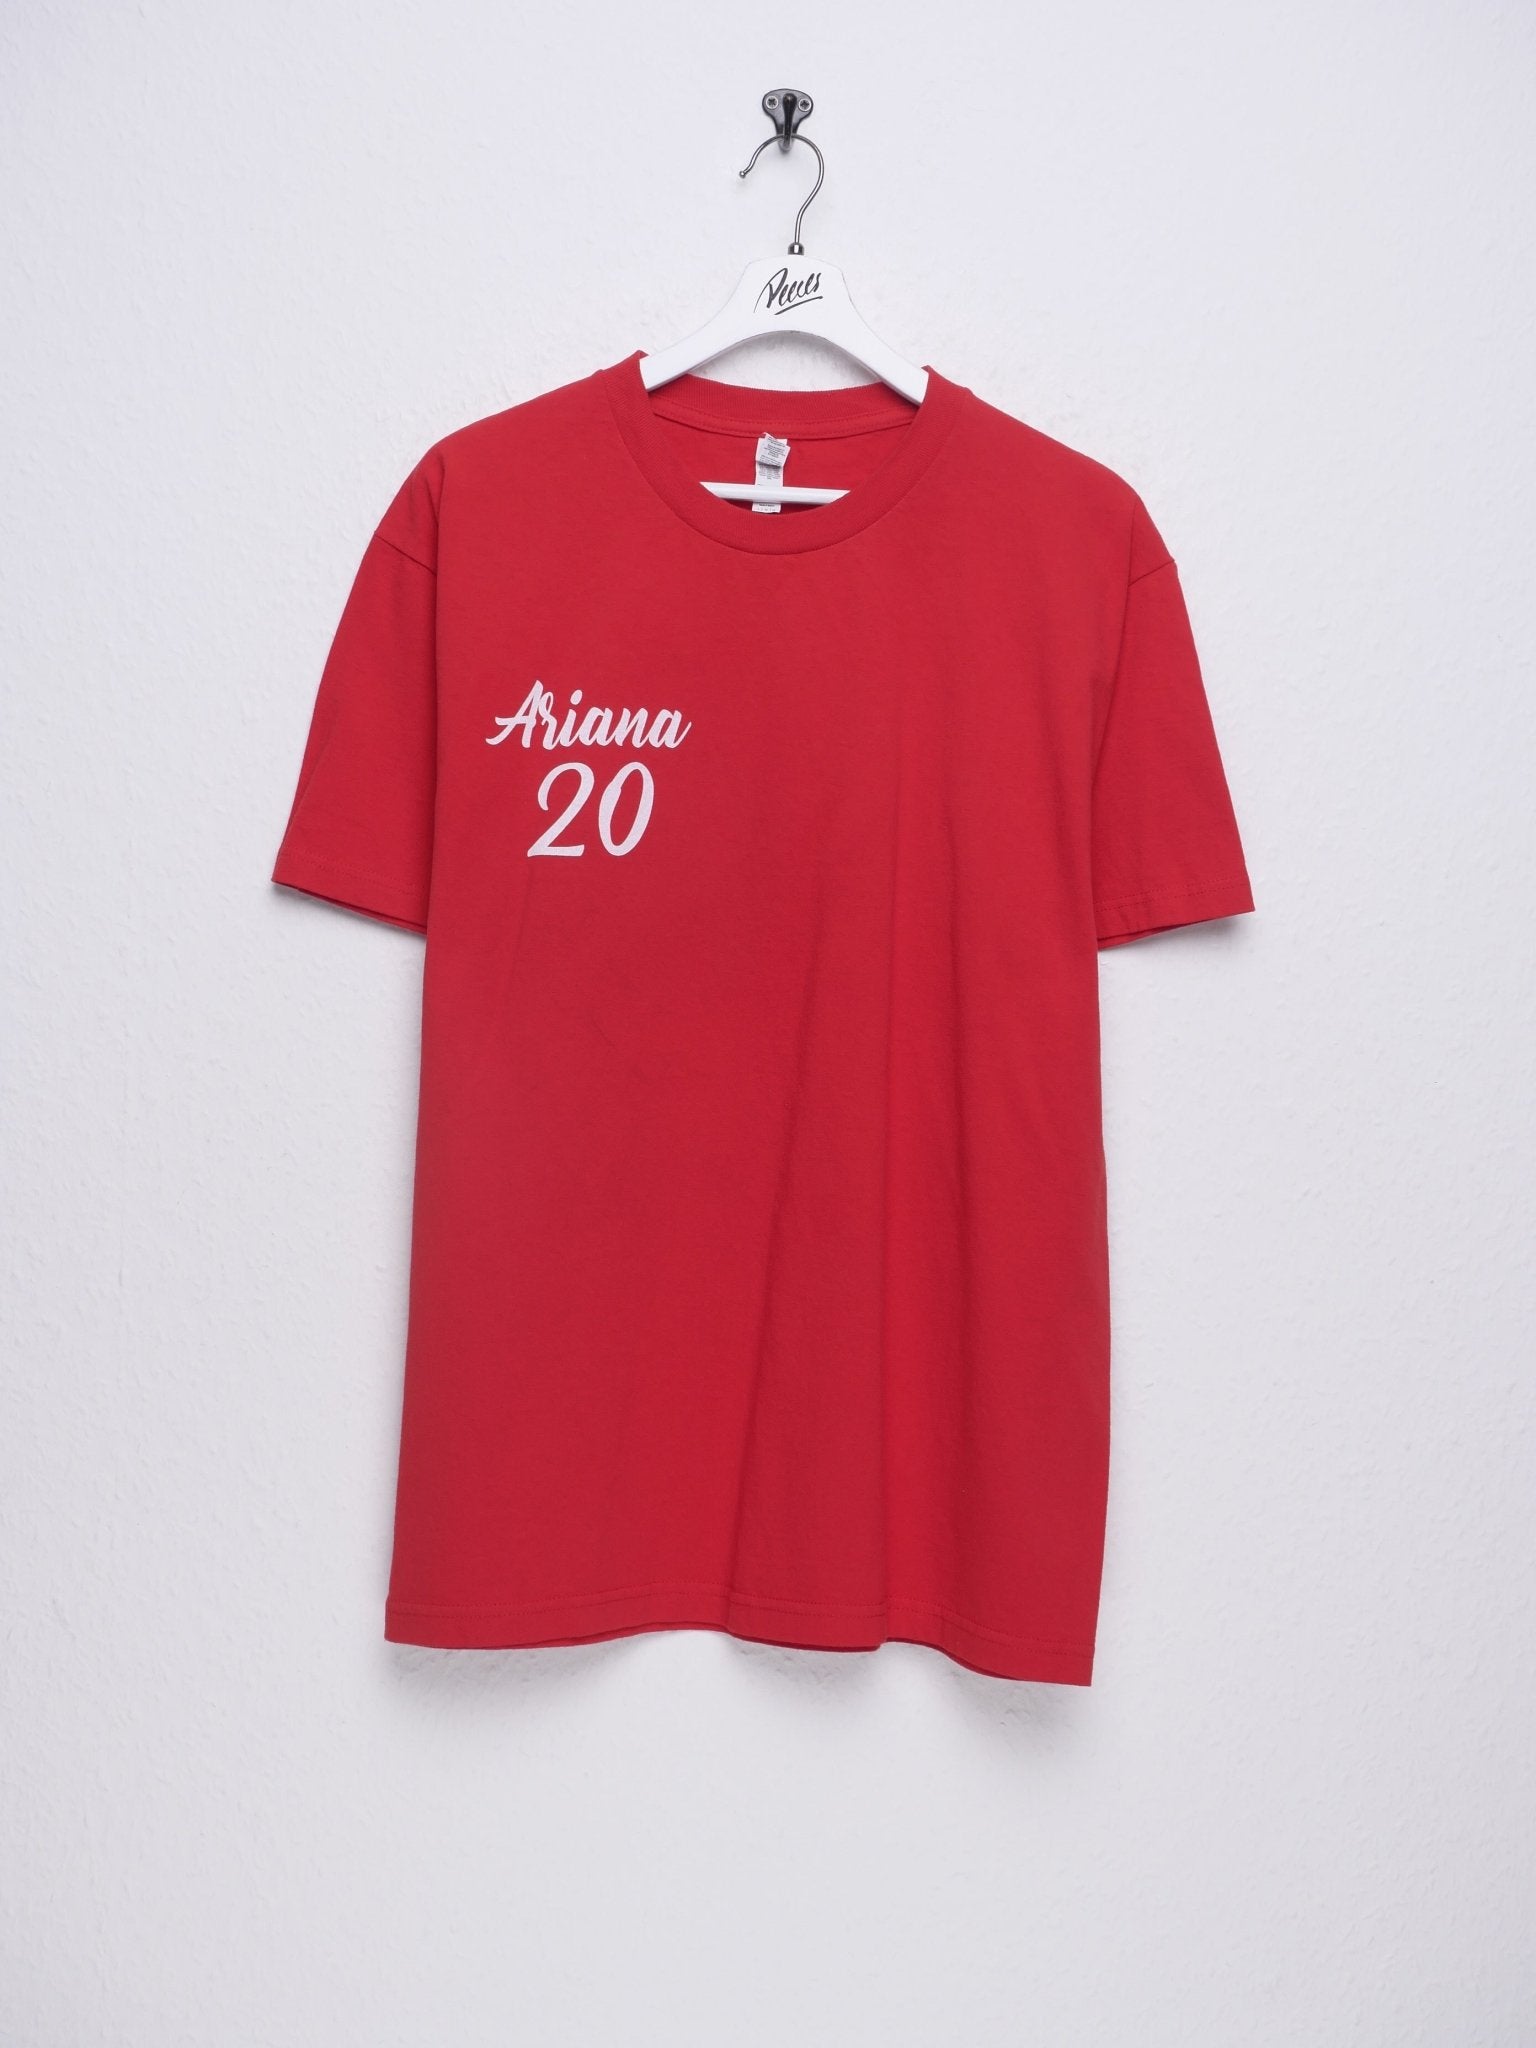 printed red Shirt - Peeces